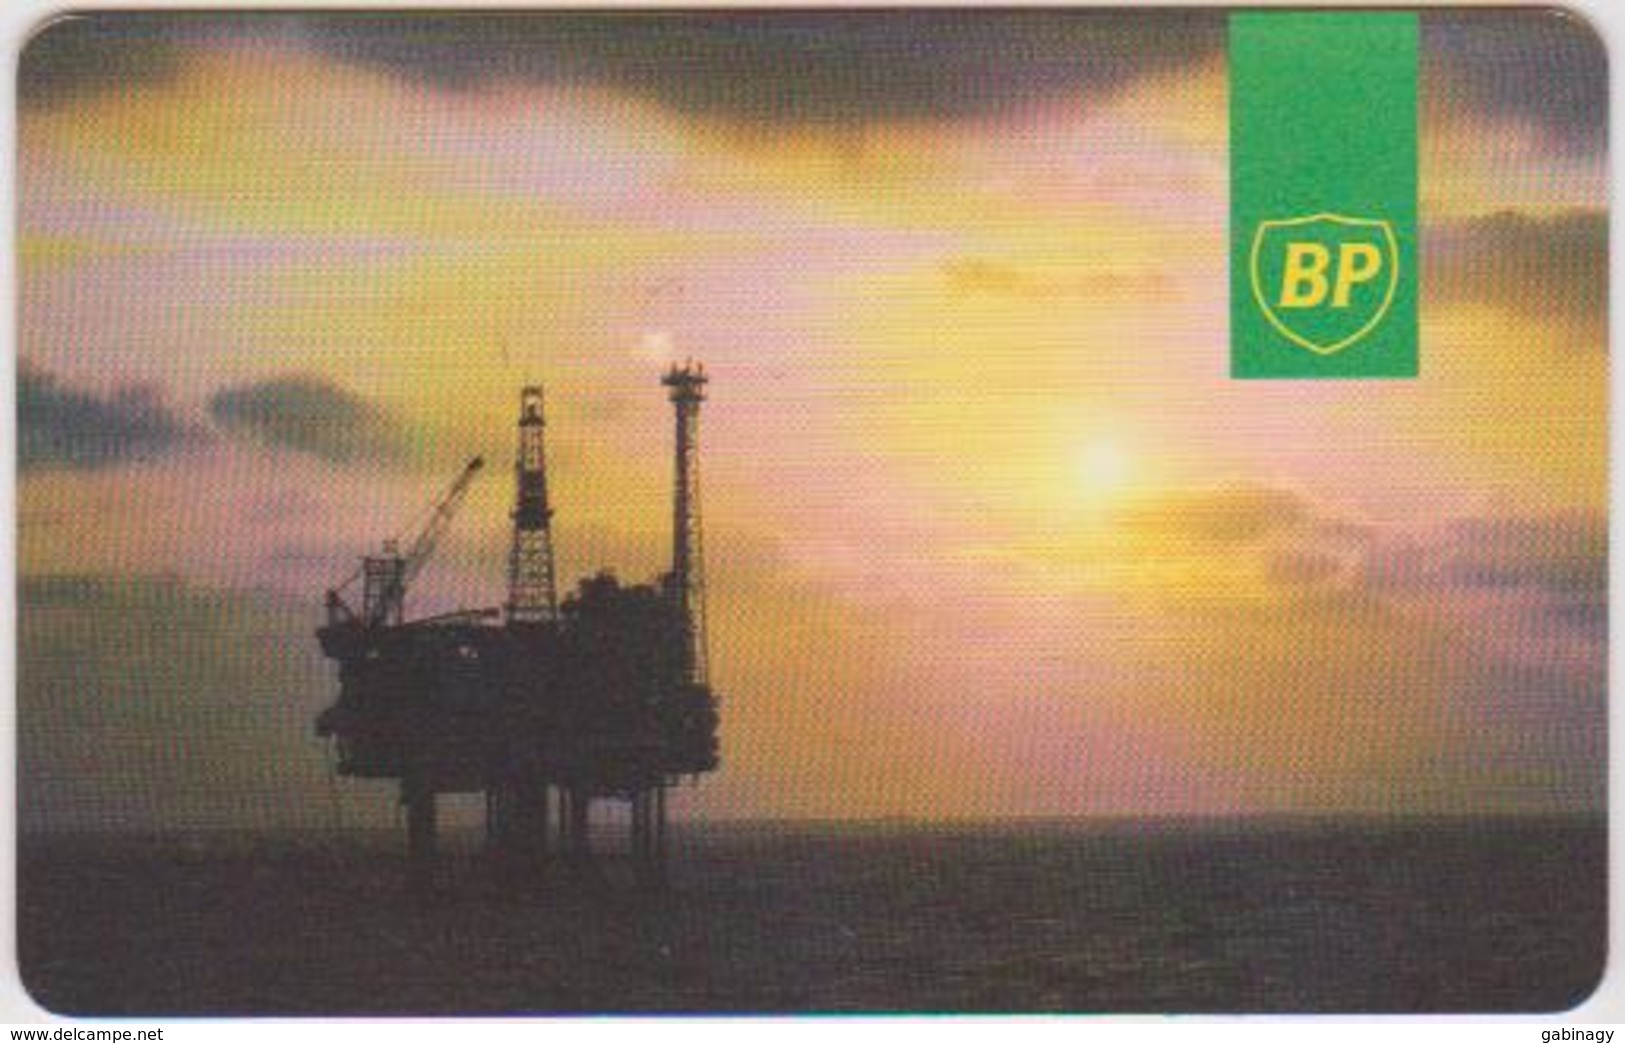 #09 - UNITED KINGDOM-07 - BP - 50 UNITS - Piattaforme Petrolifere